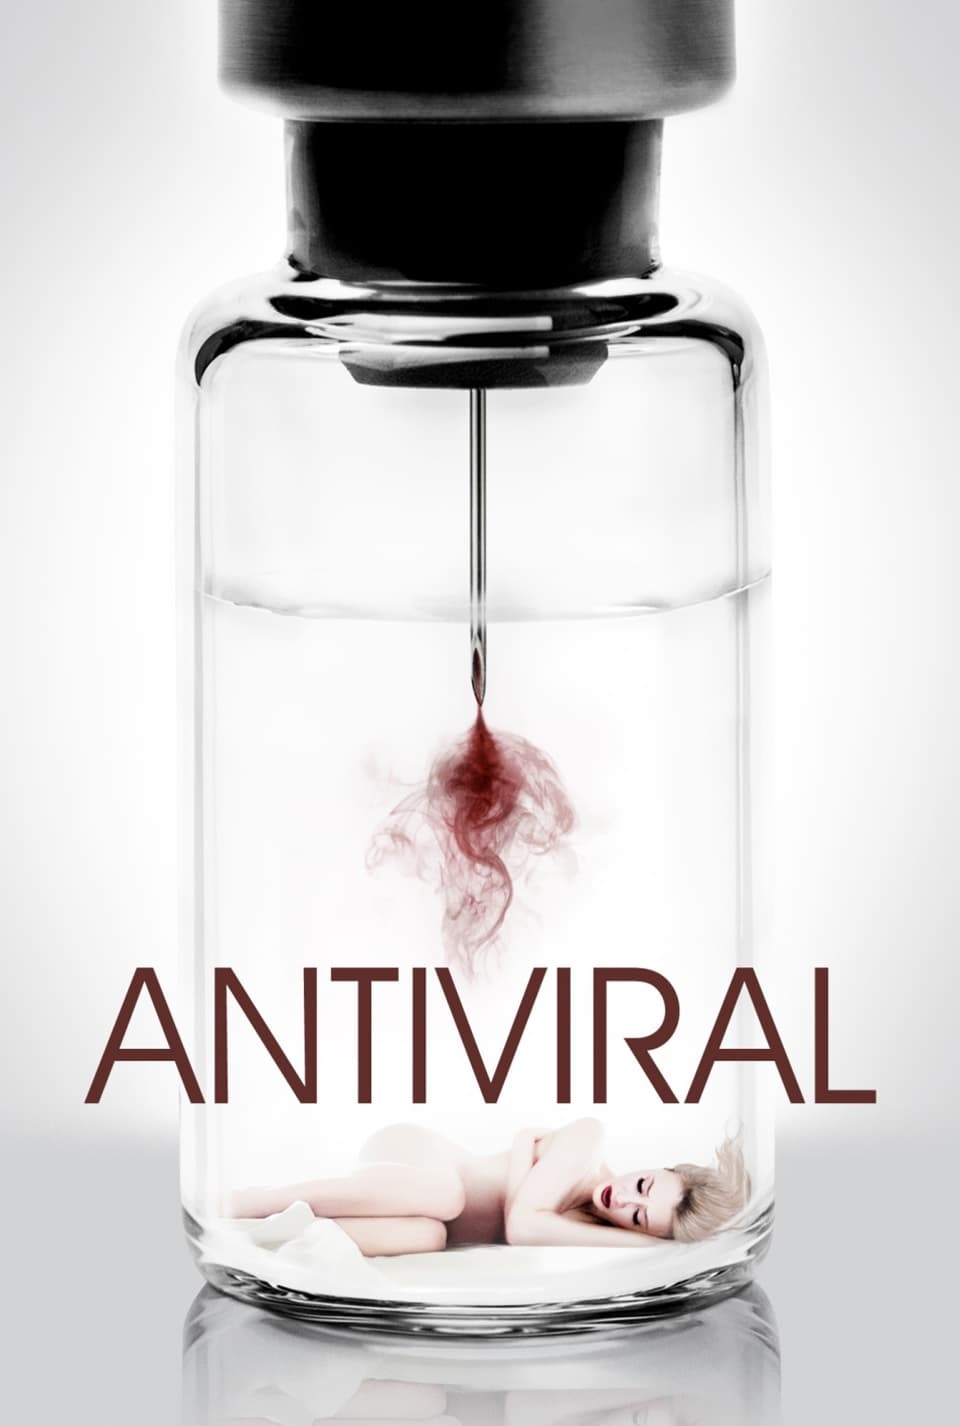 Affiche du film Antiviral poster